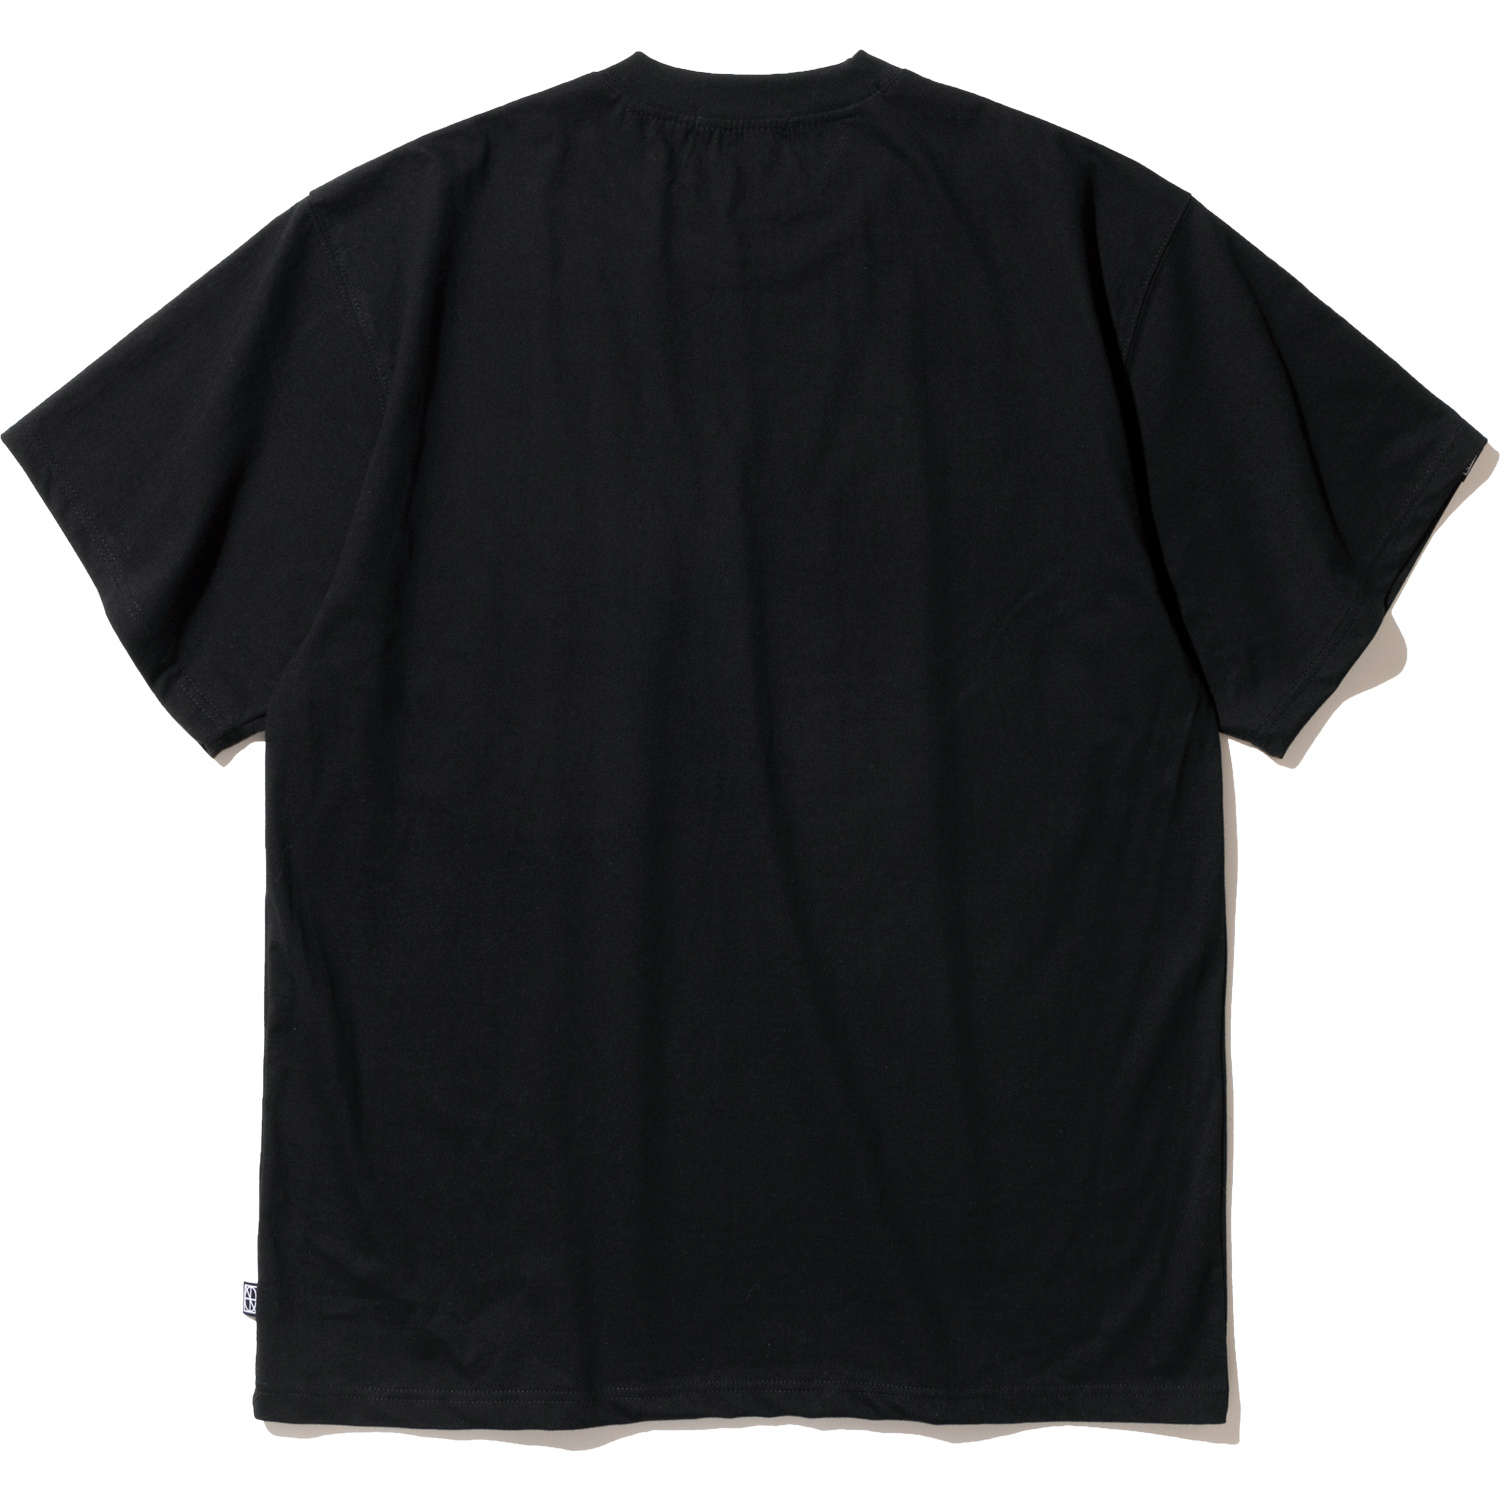 Wrong People T-Shirts - Black,NOT4NERD